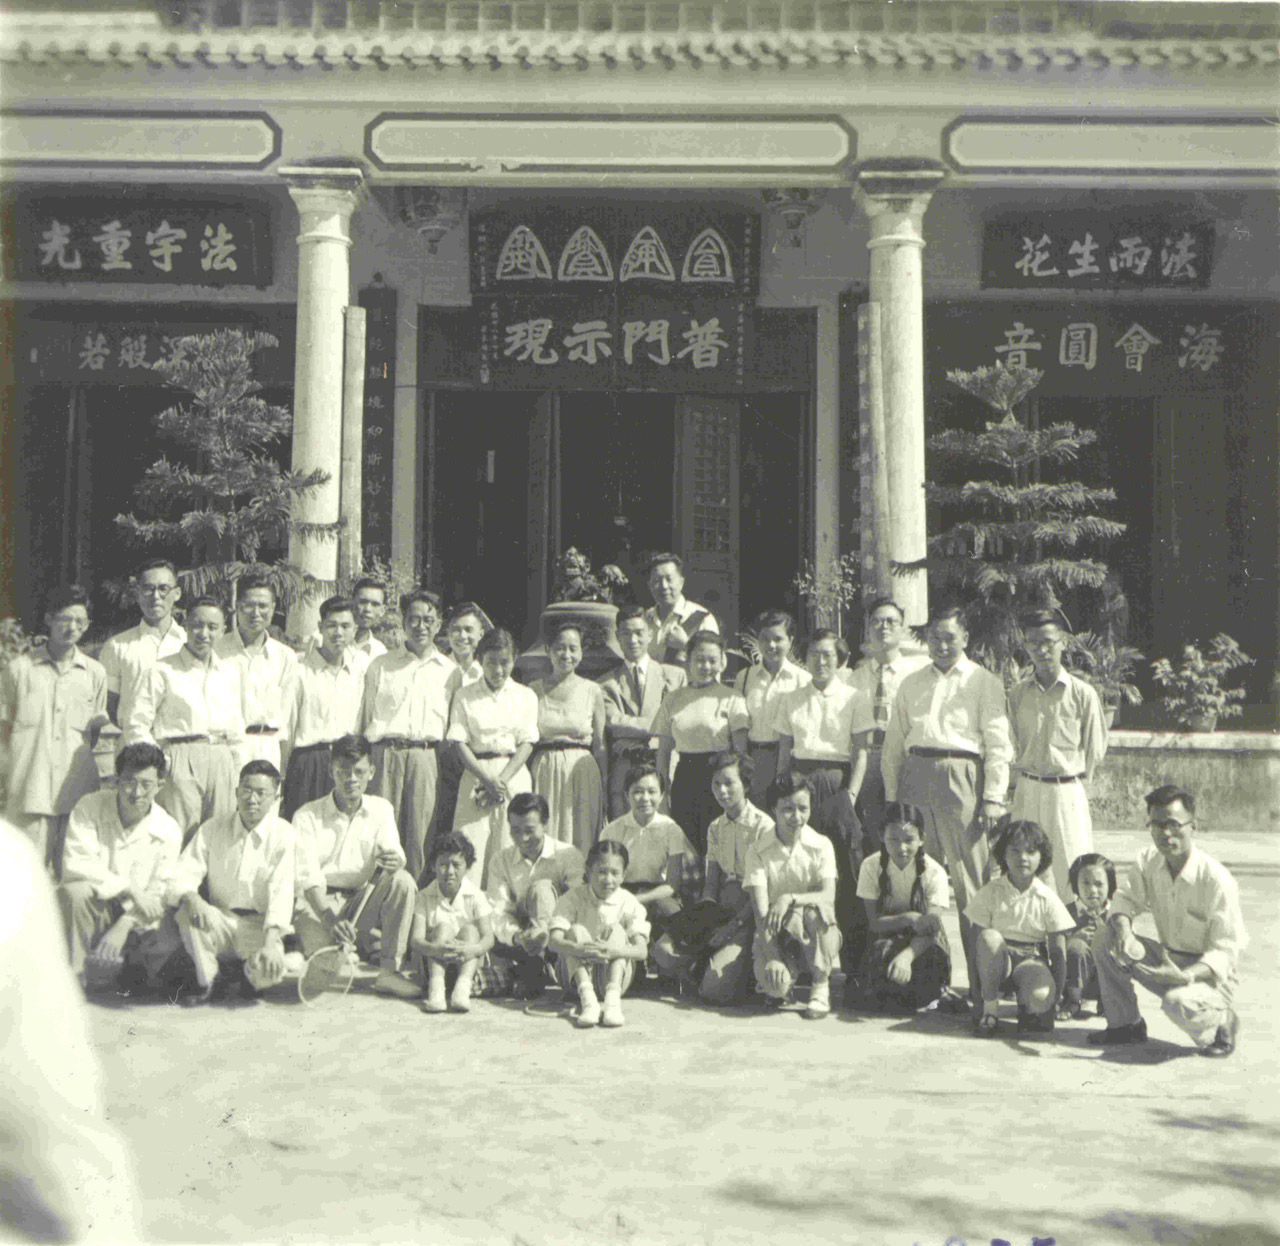 Grand hall of Tung Po Tor Monastery (1955)